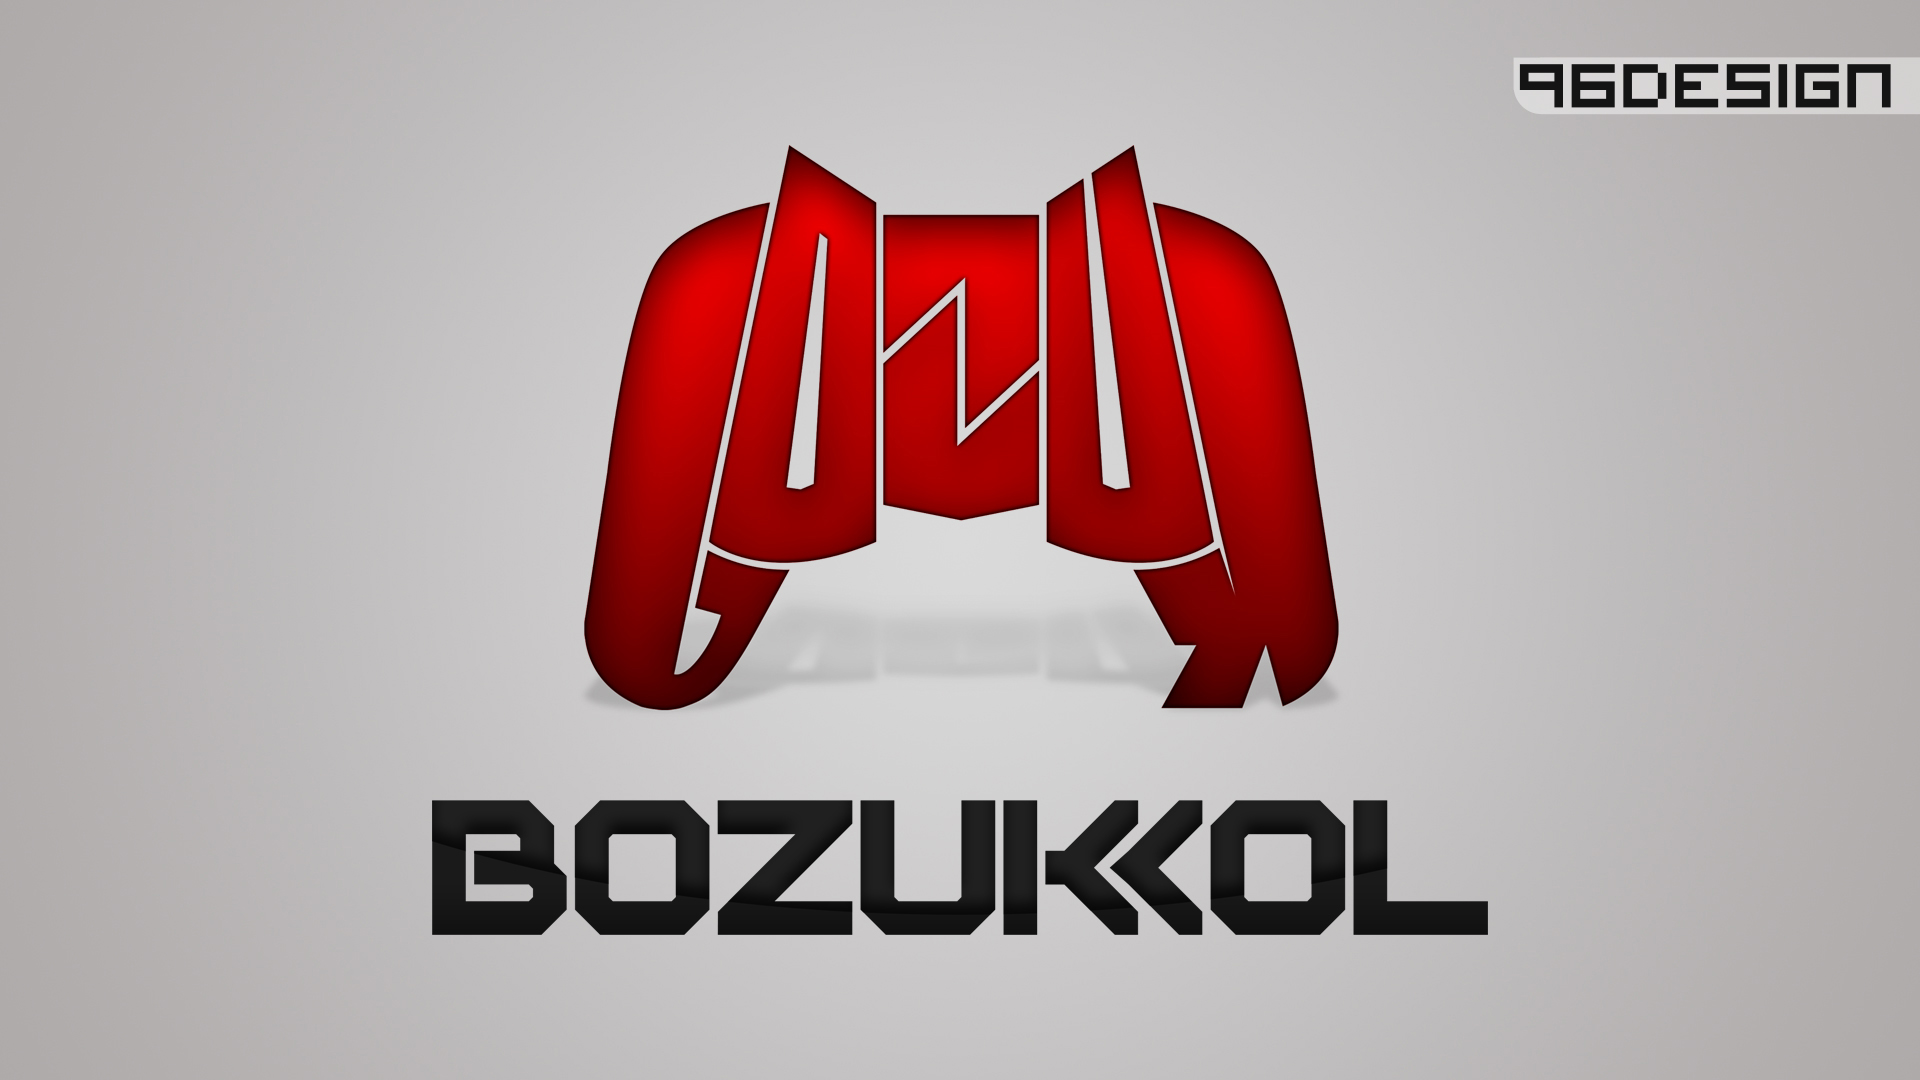 bozukkol_logotype_by_96design-d5ut0s1.jpg